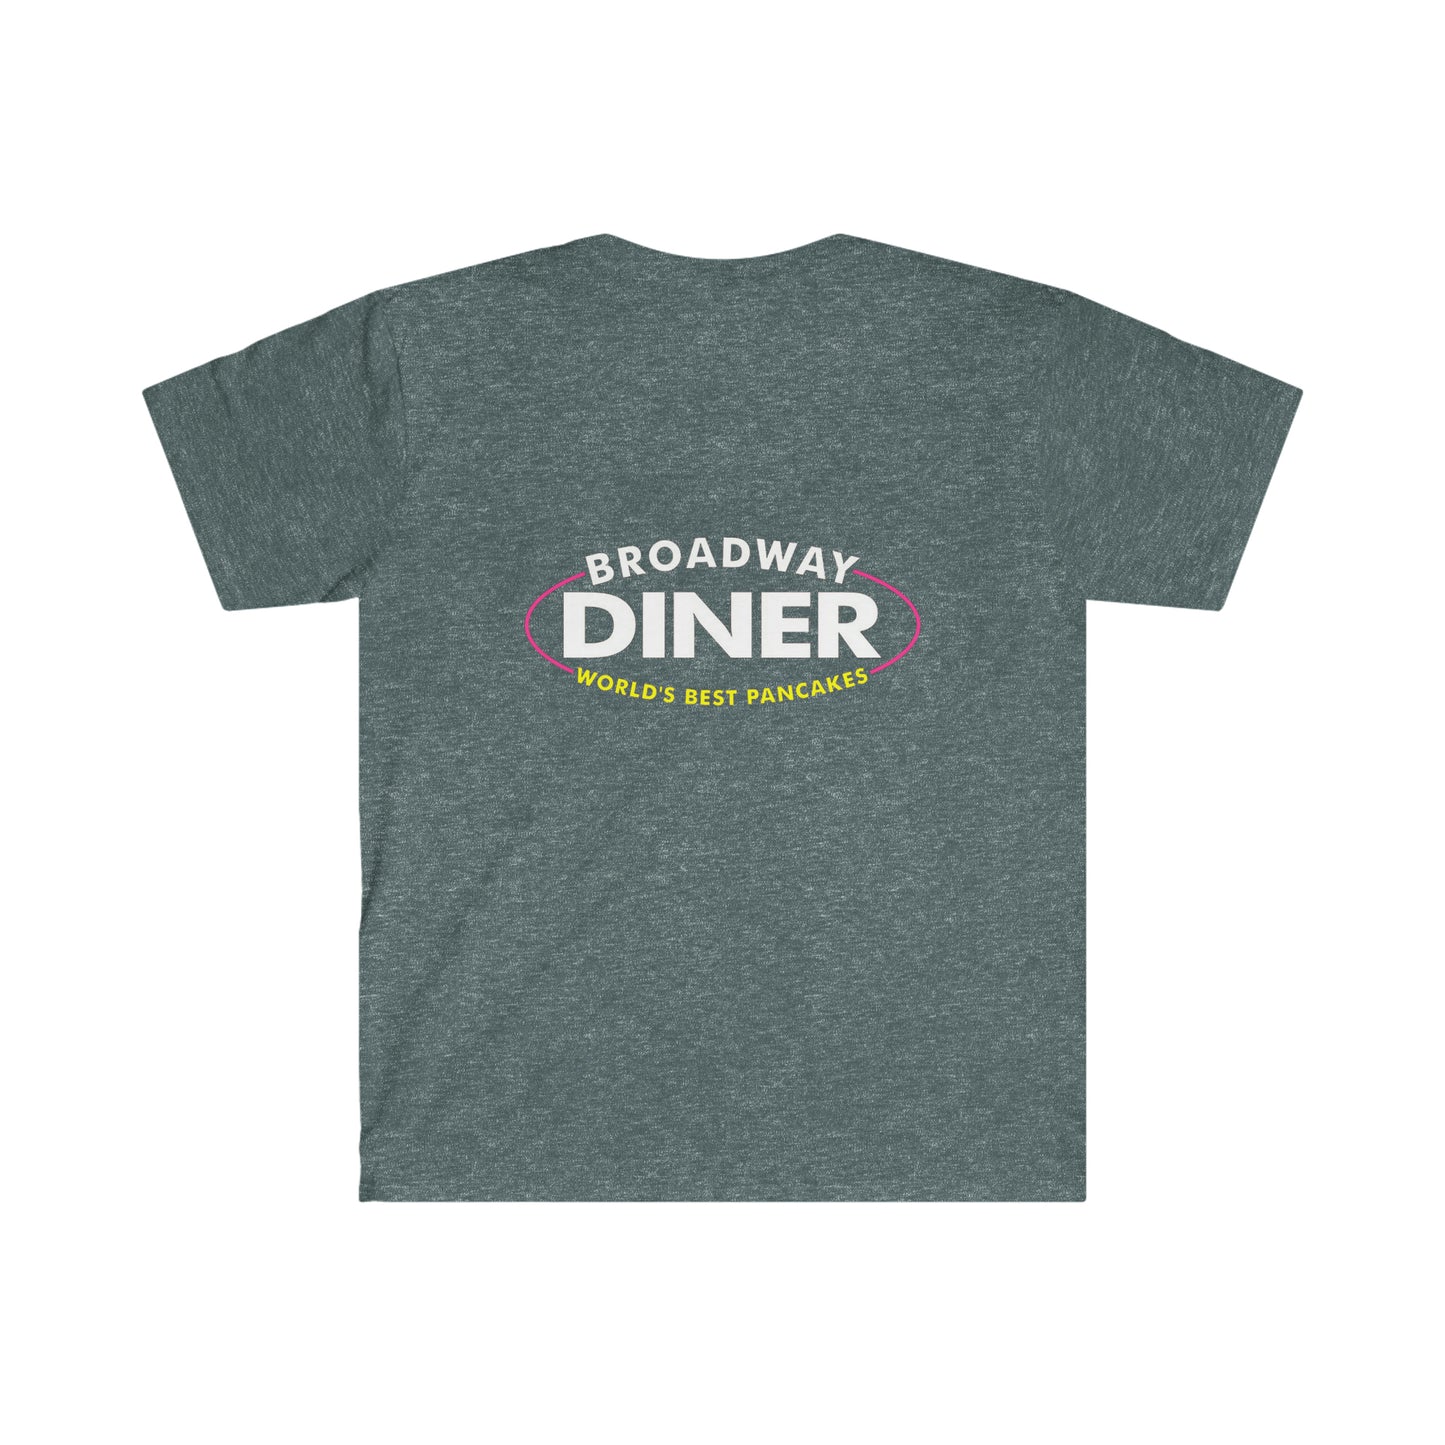 Broadway Diner Short Sleeved Team Shirt in 9 colors